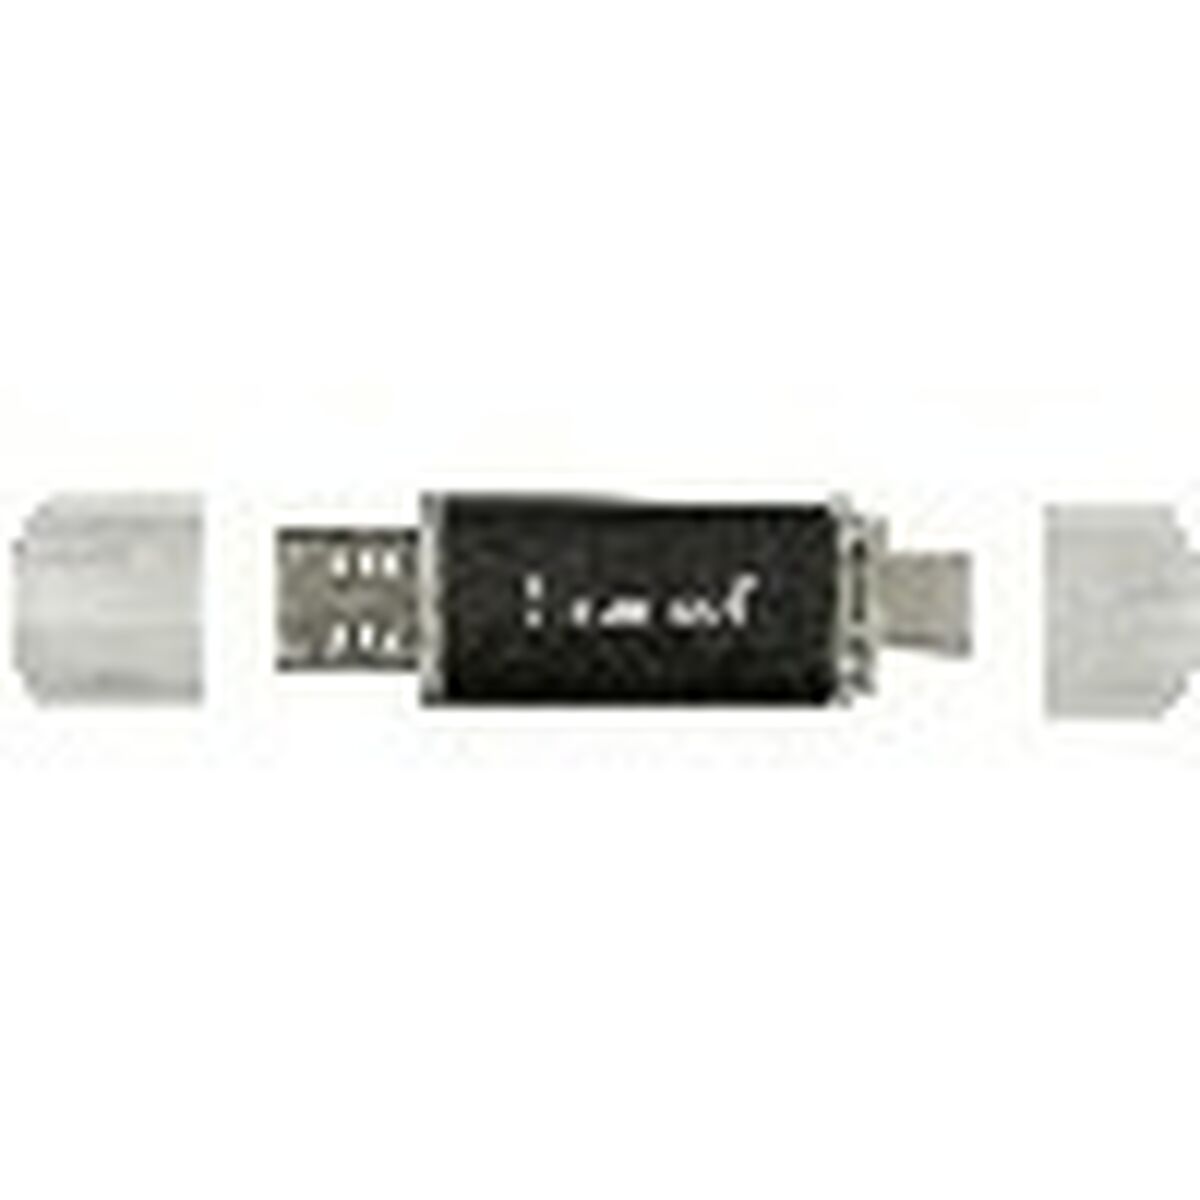 USB stick INTENSO Anthracite 32 GB